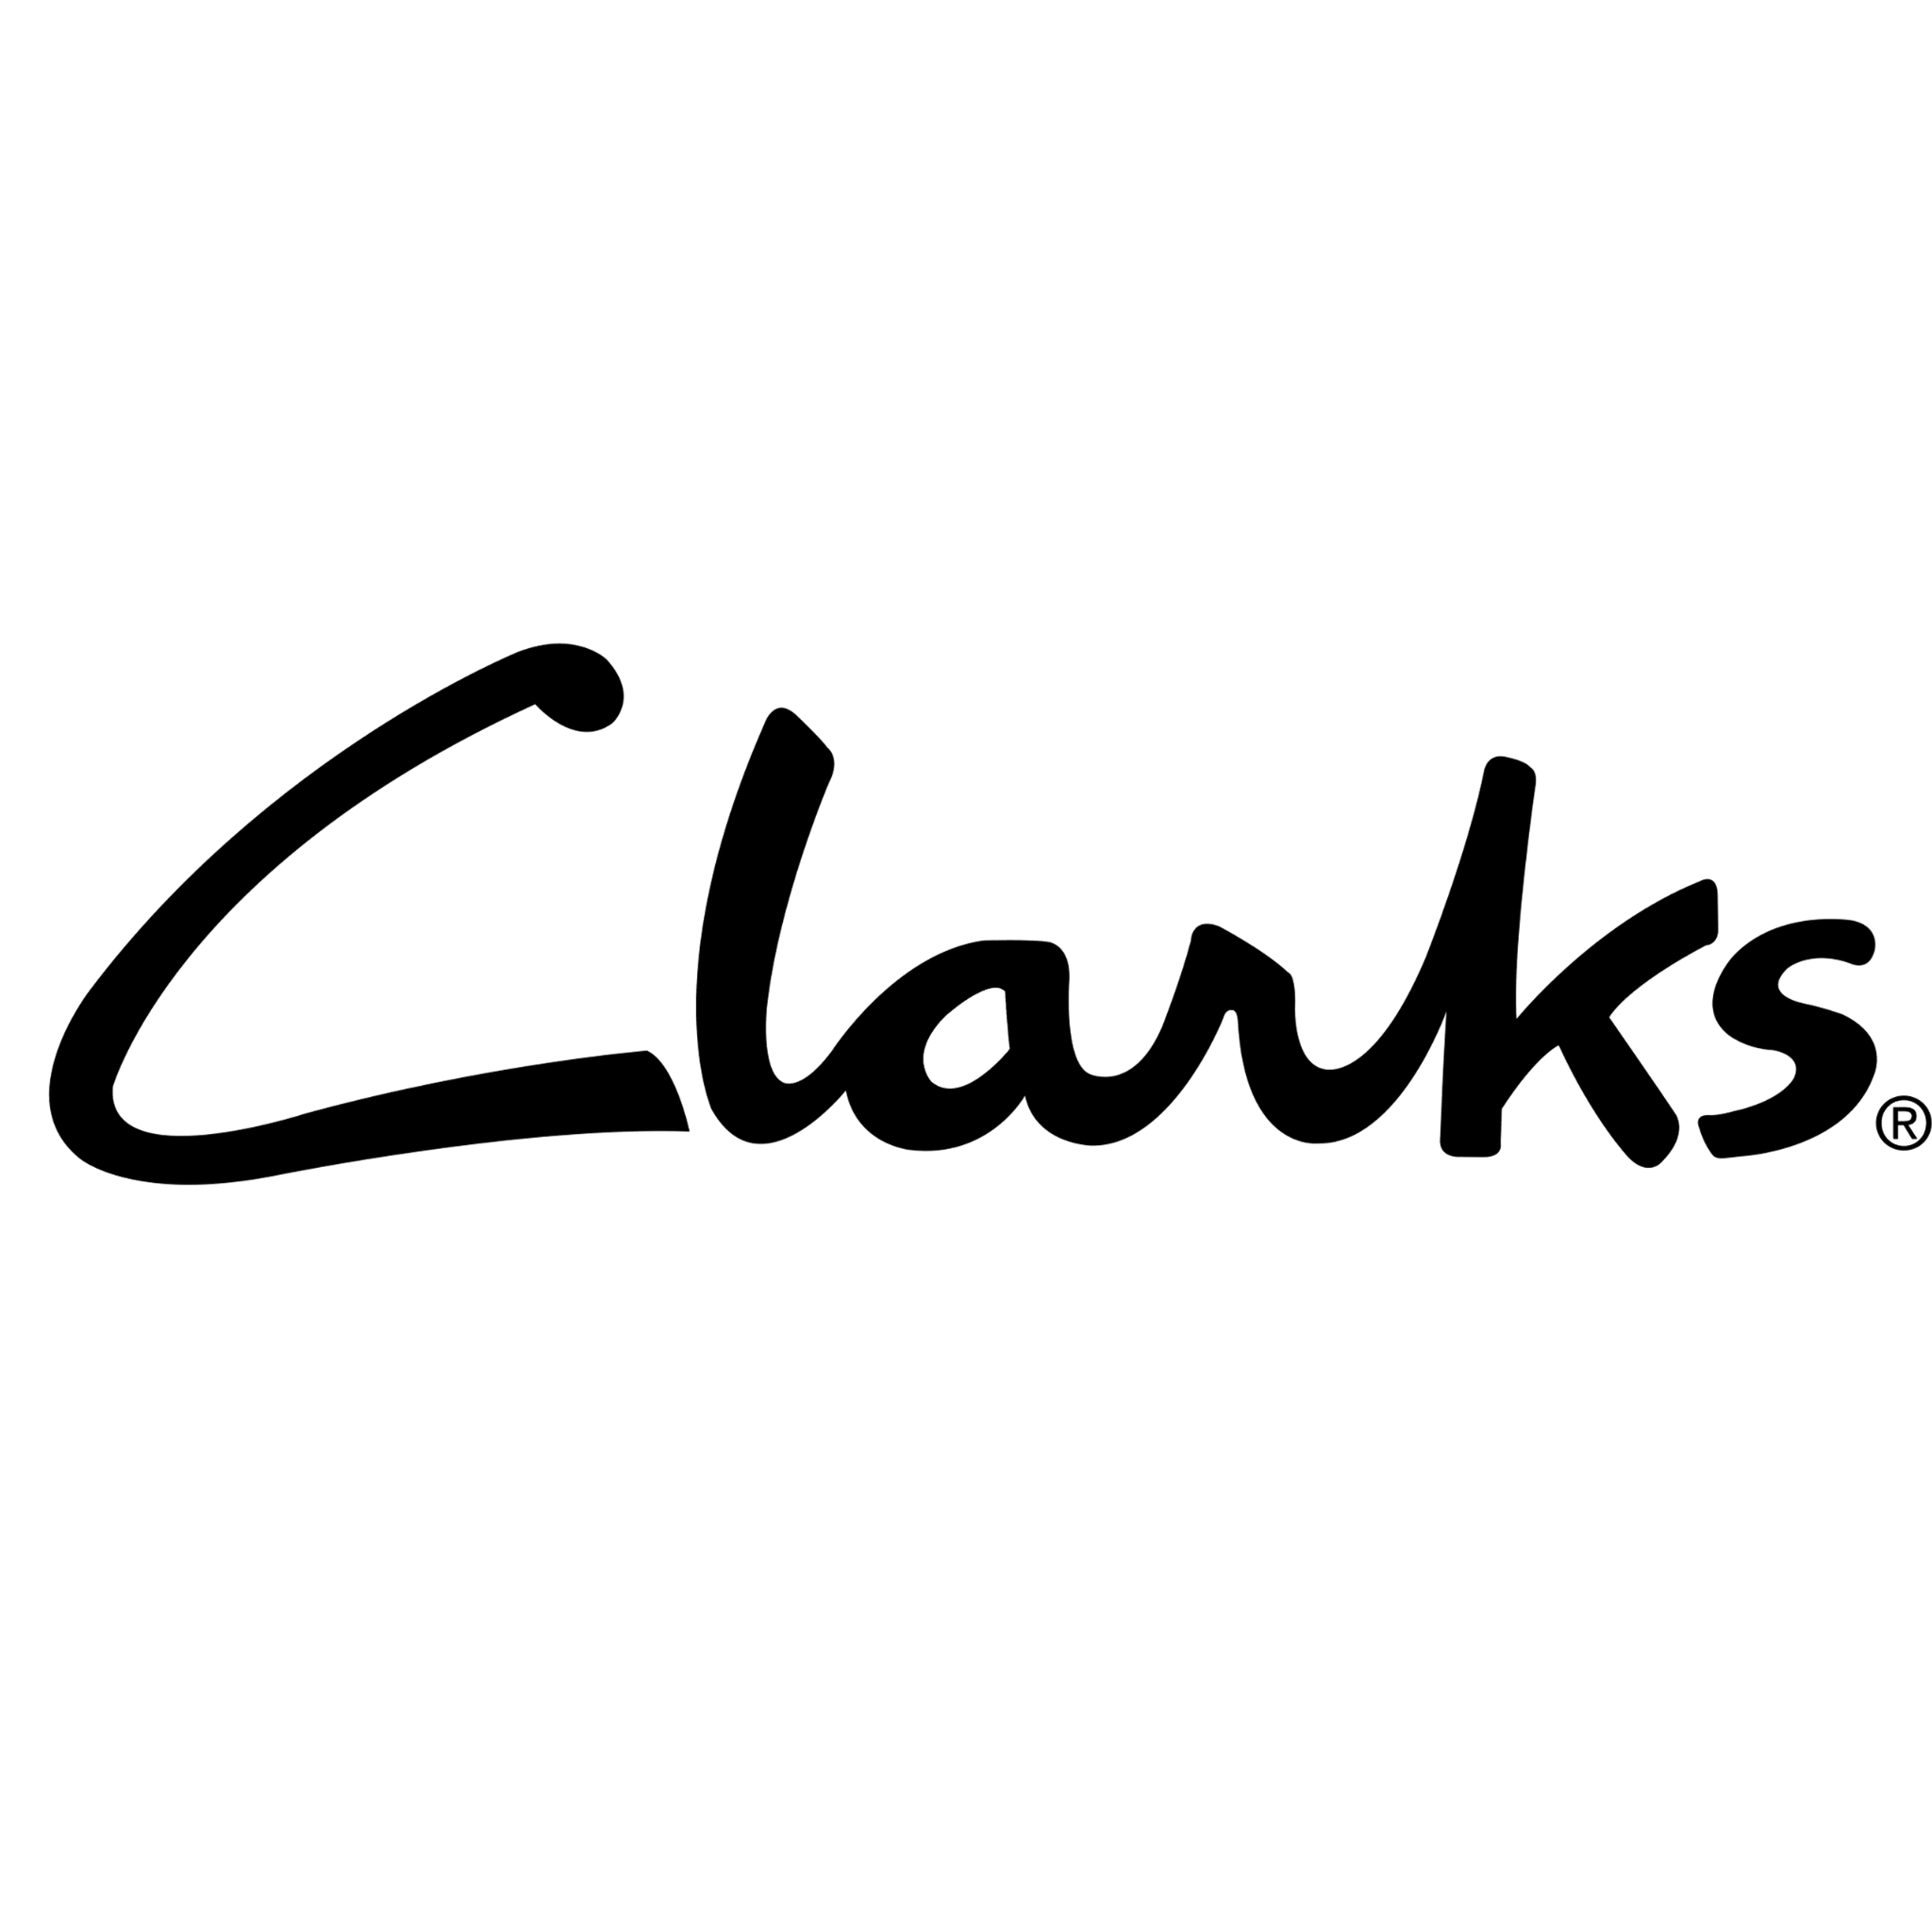 Clarks Black Friday Sale